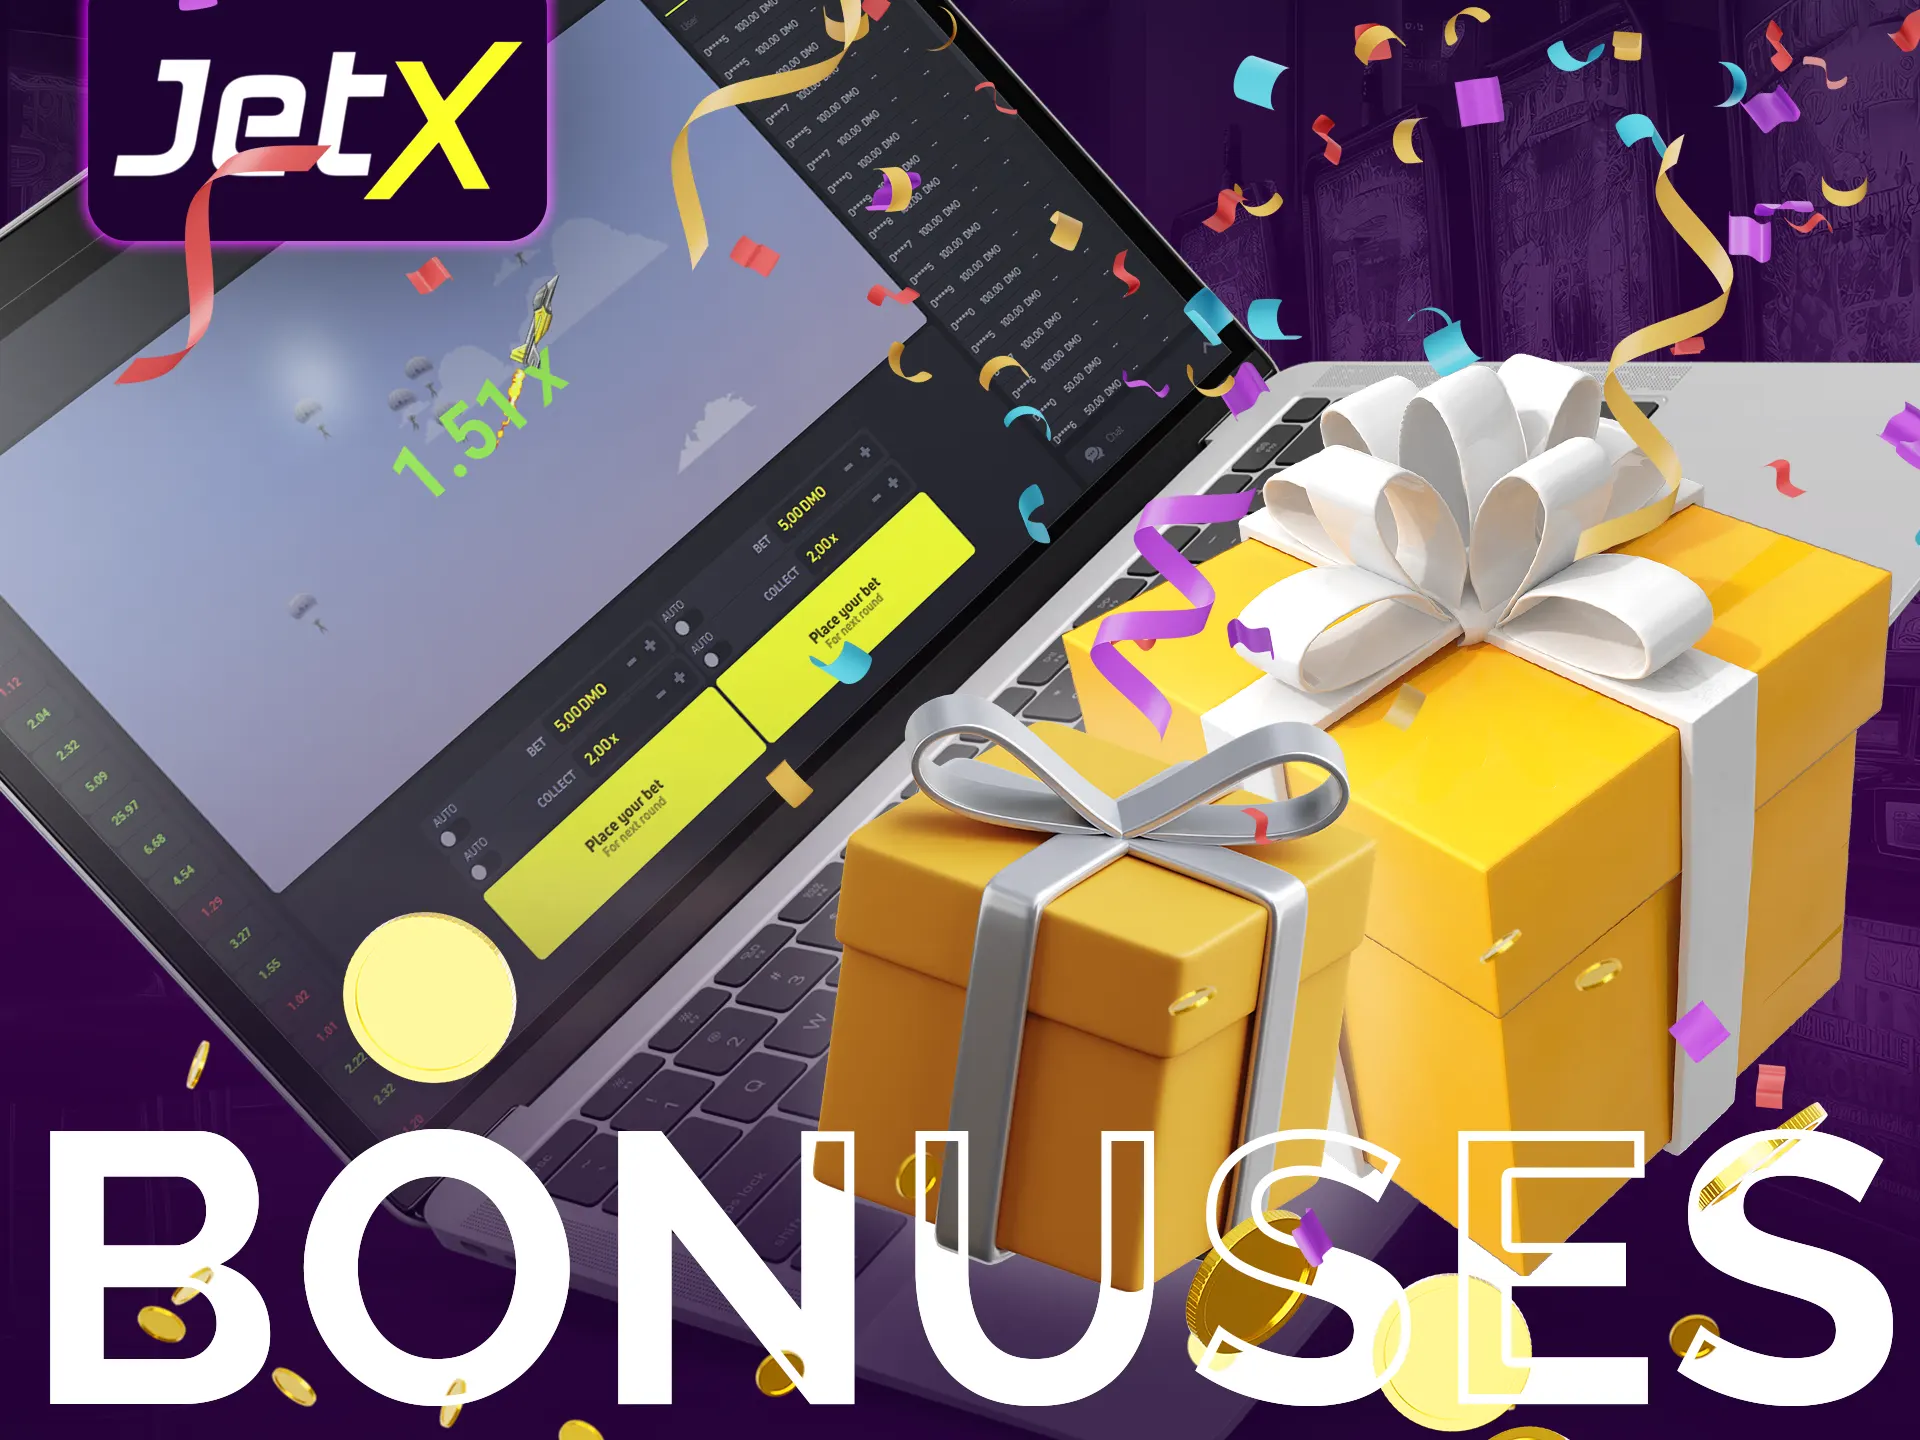 Enjoy Jet X bonuses at Indian online casinos.